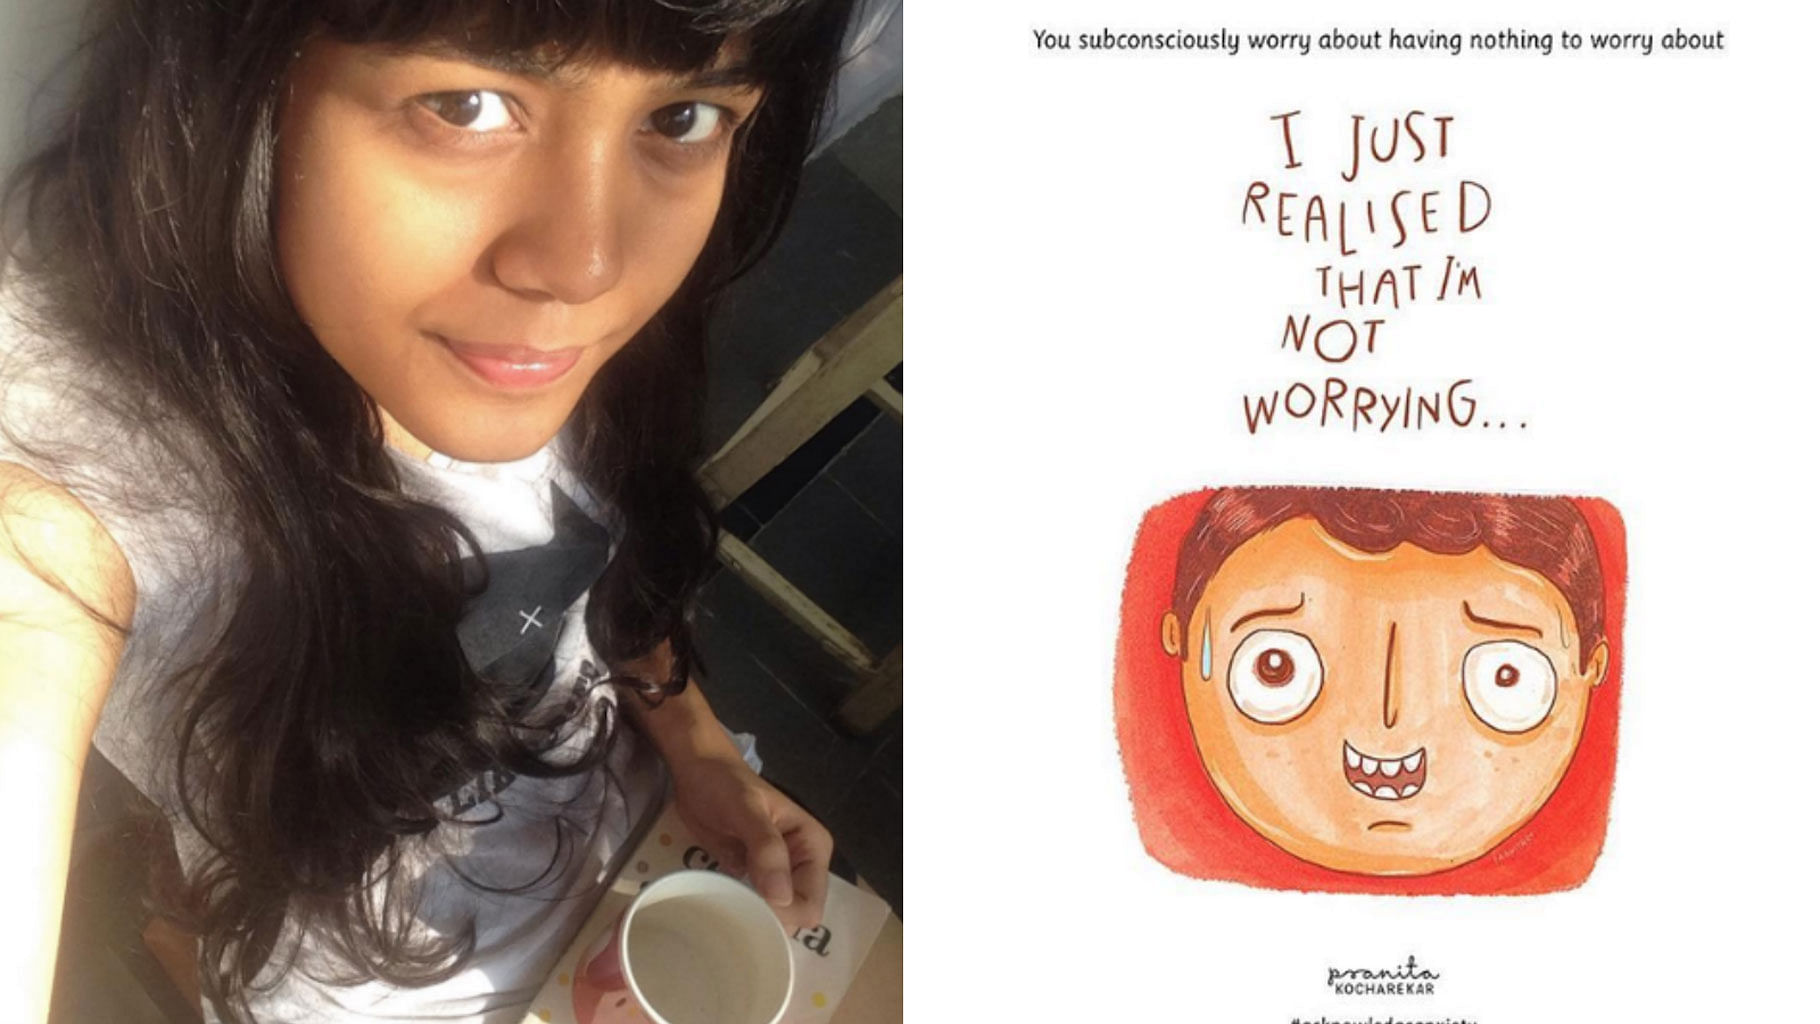 Pranita Kocharekar with one of her illustrations. (Photo courtesy: Instagram)